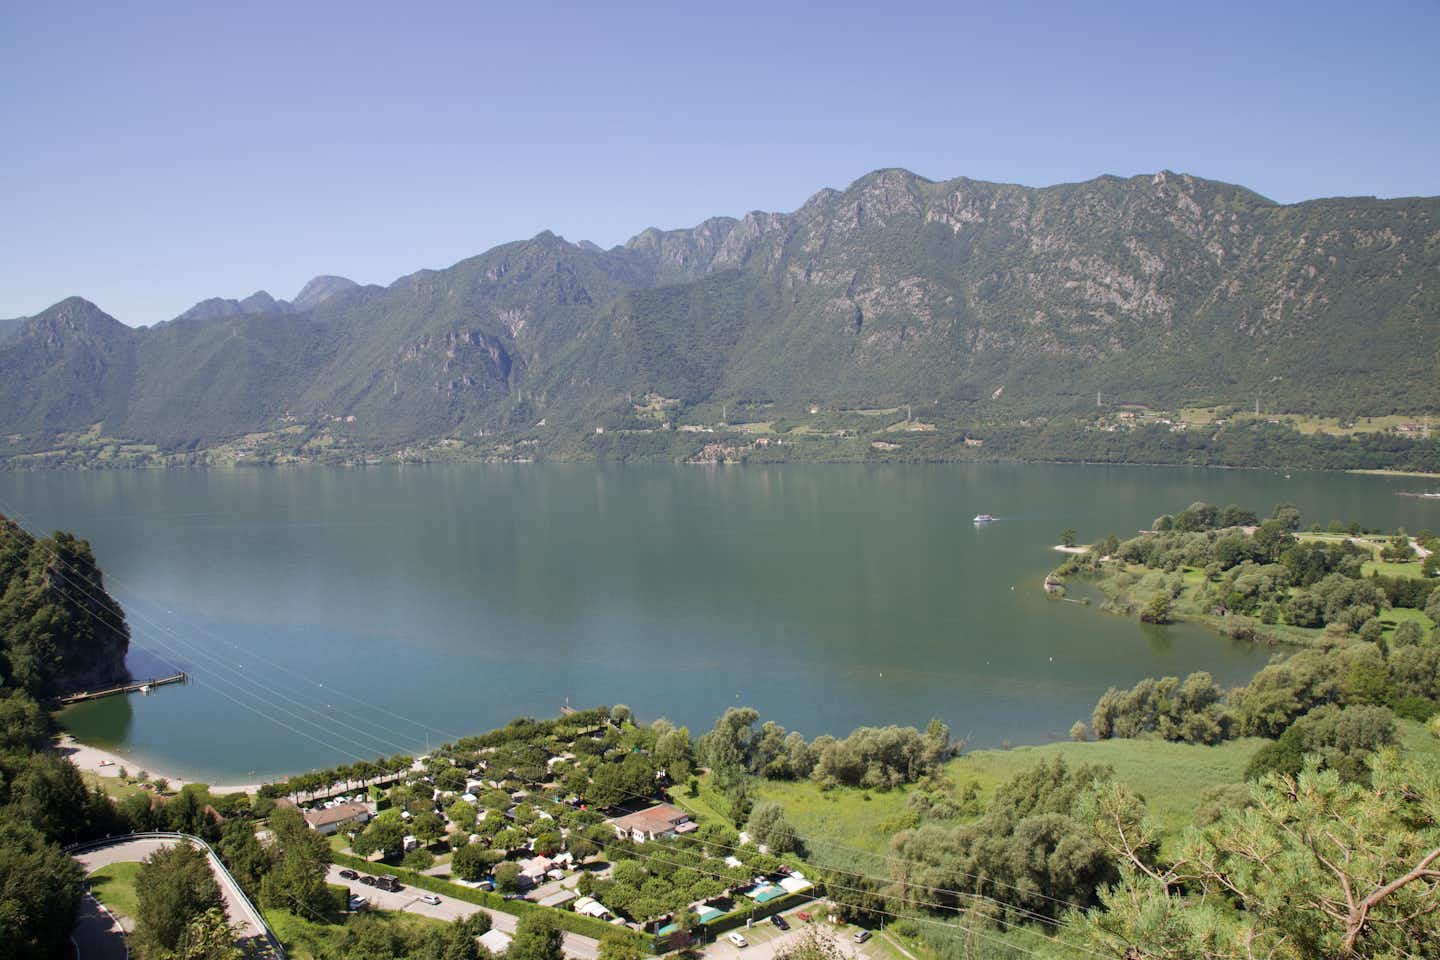 Camping Miralago - Blick auf den Campingplatz am Ufer des Sees